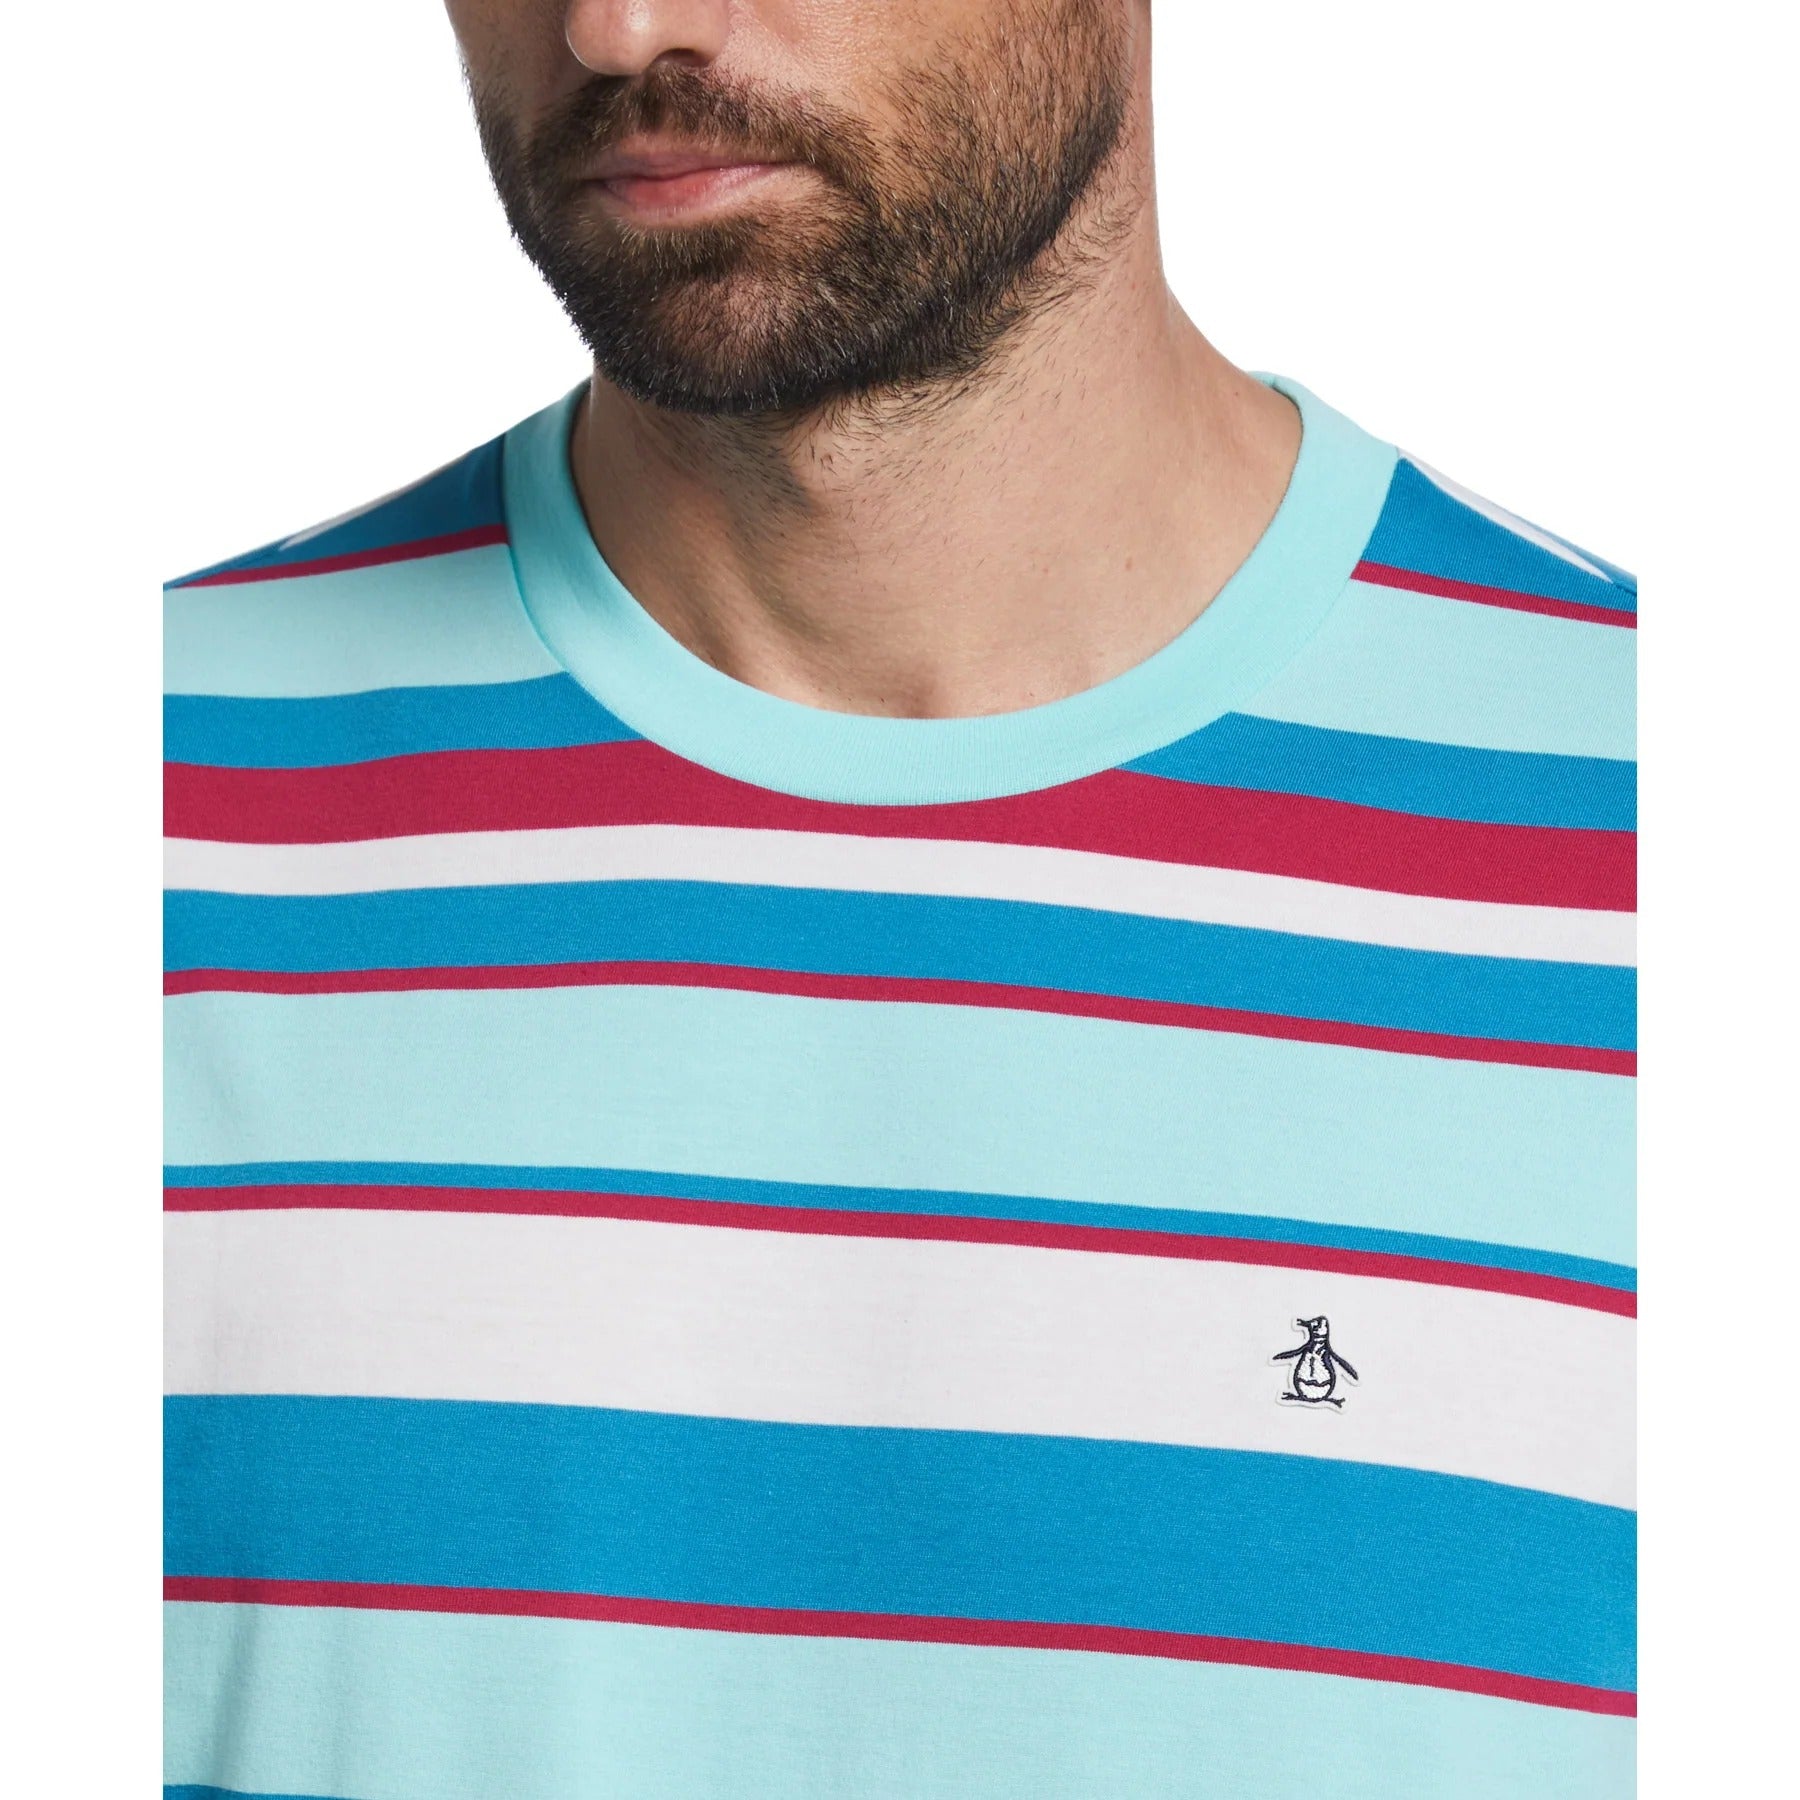 Original Penguin Multi Striped T-Shirt Aruba Blue